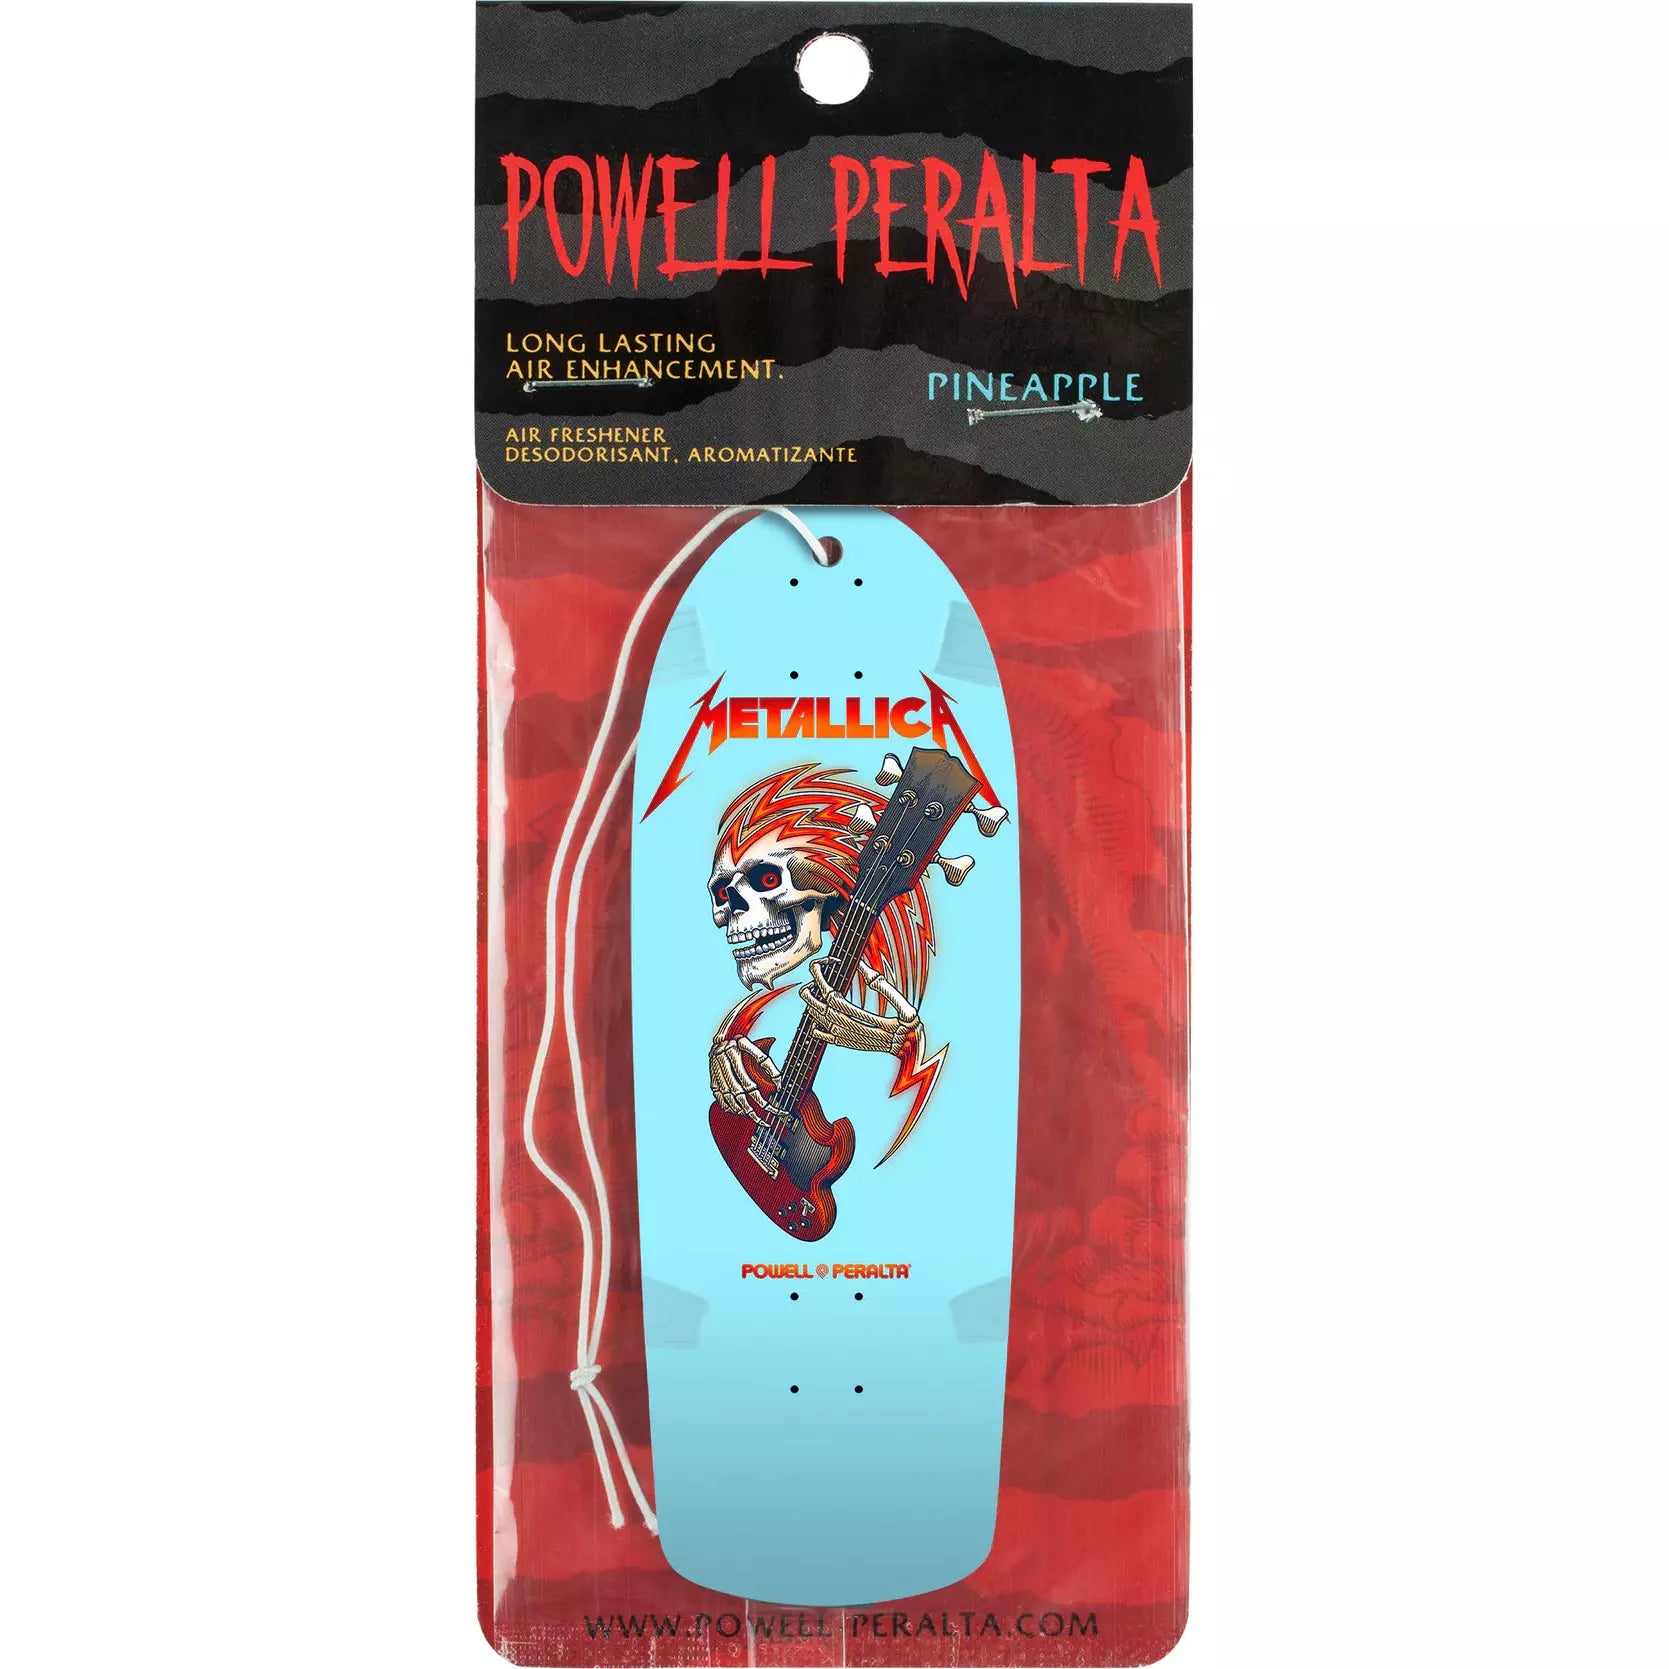 Air Freshener Powell Peralta X Metallica Collab Air Freshener- Blue Powell Peralta The Groove Skate Shop